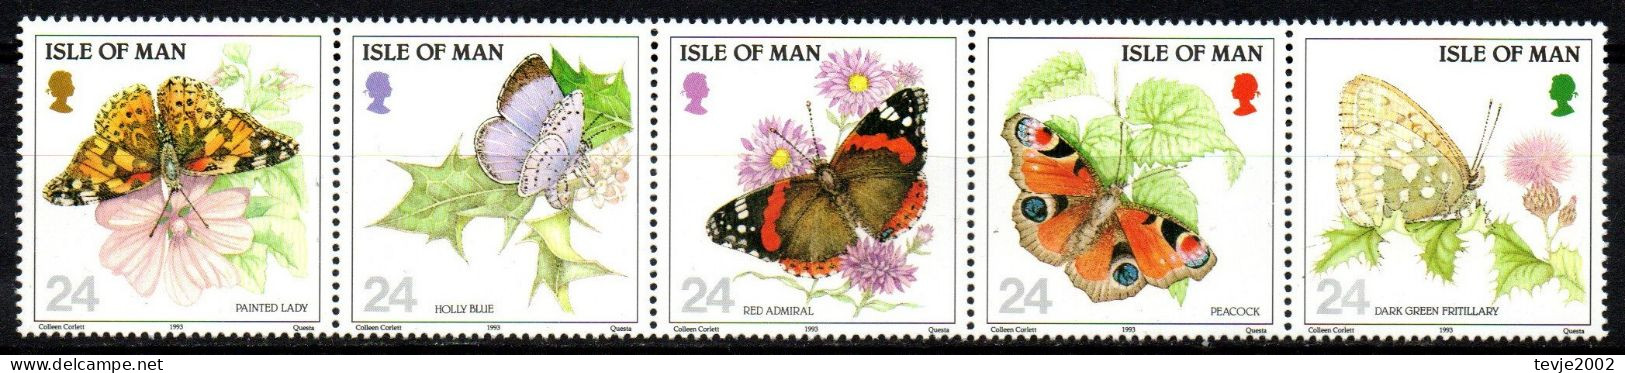 Isle Of Man 1993 - Mi.Nr. 555 - 559 - Postfrisch MNH - Tiere Animals Schmetterlinge Butterflies - Papillons